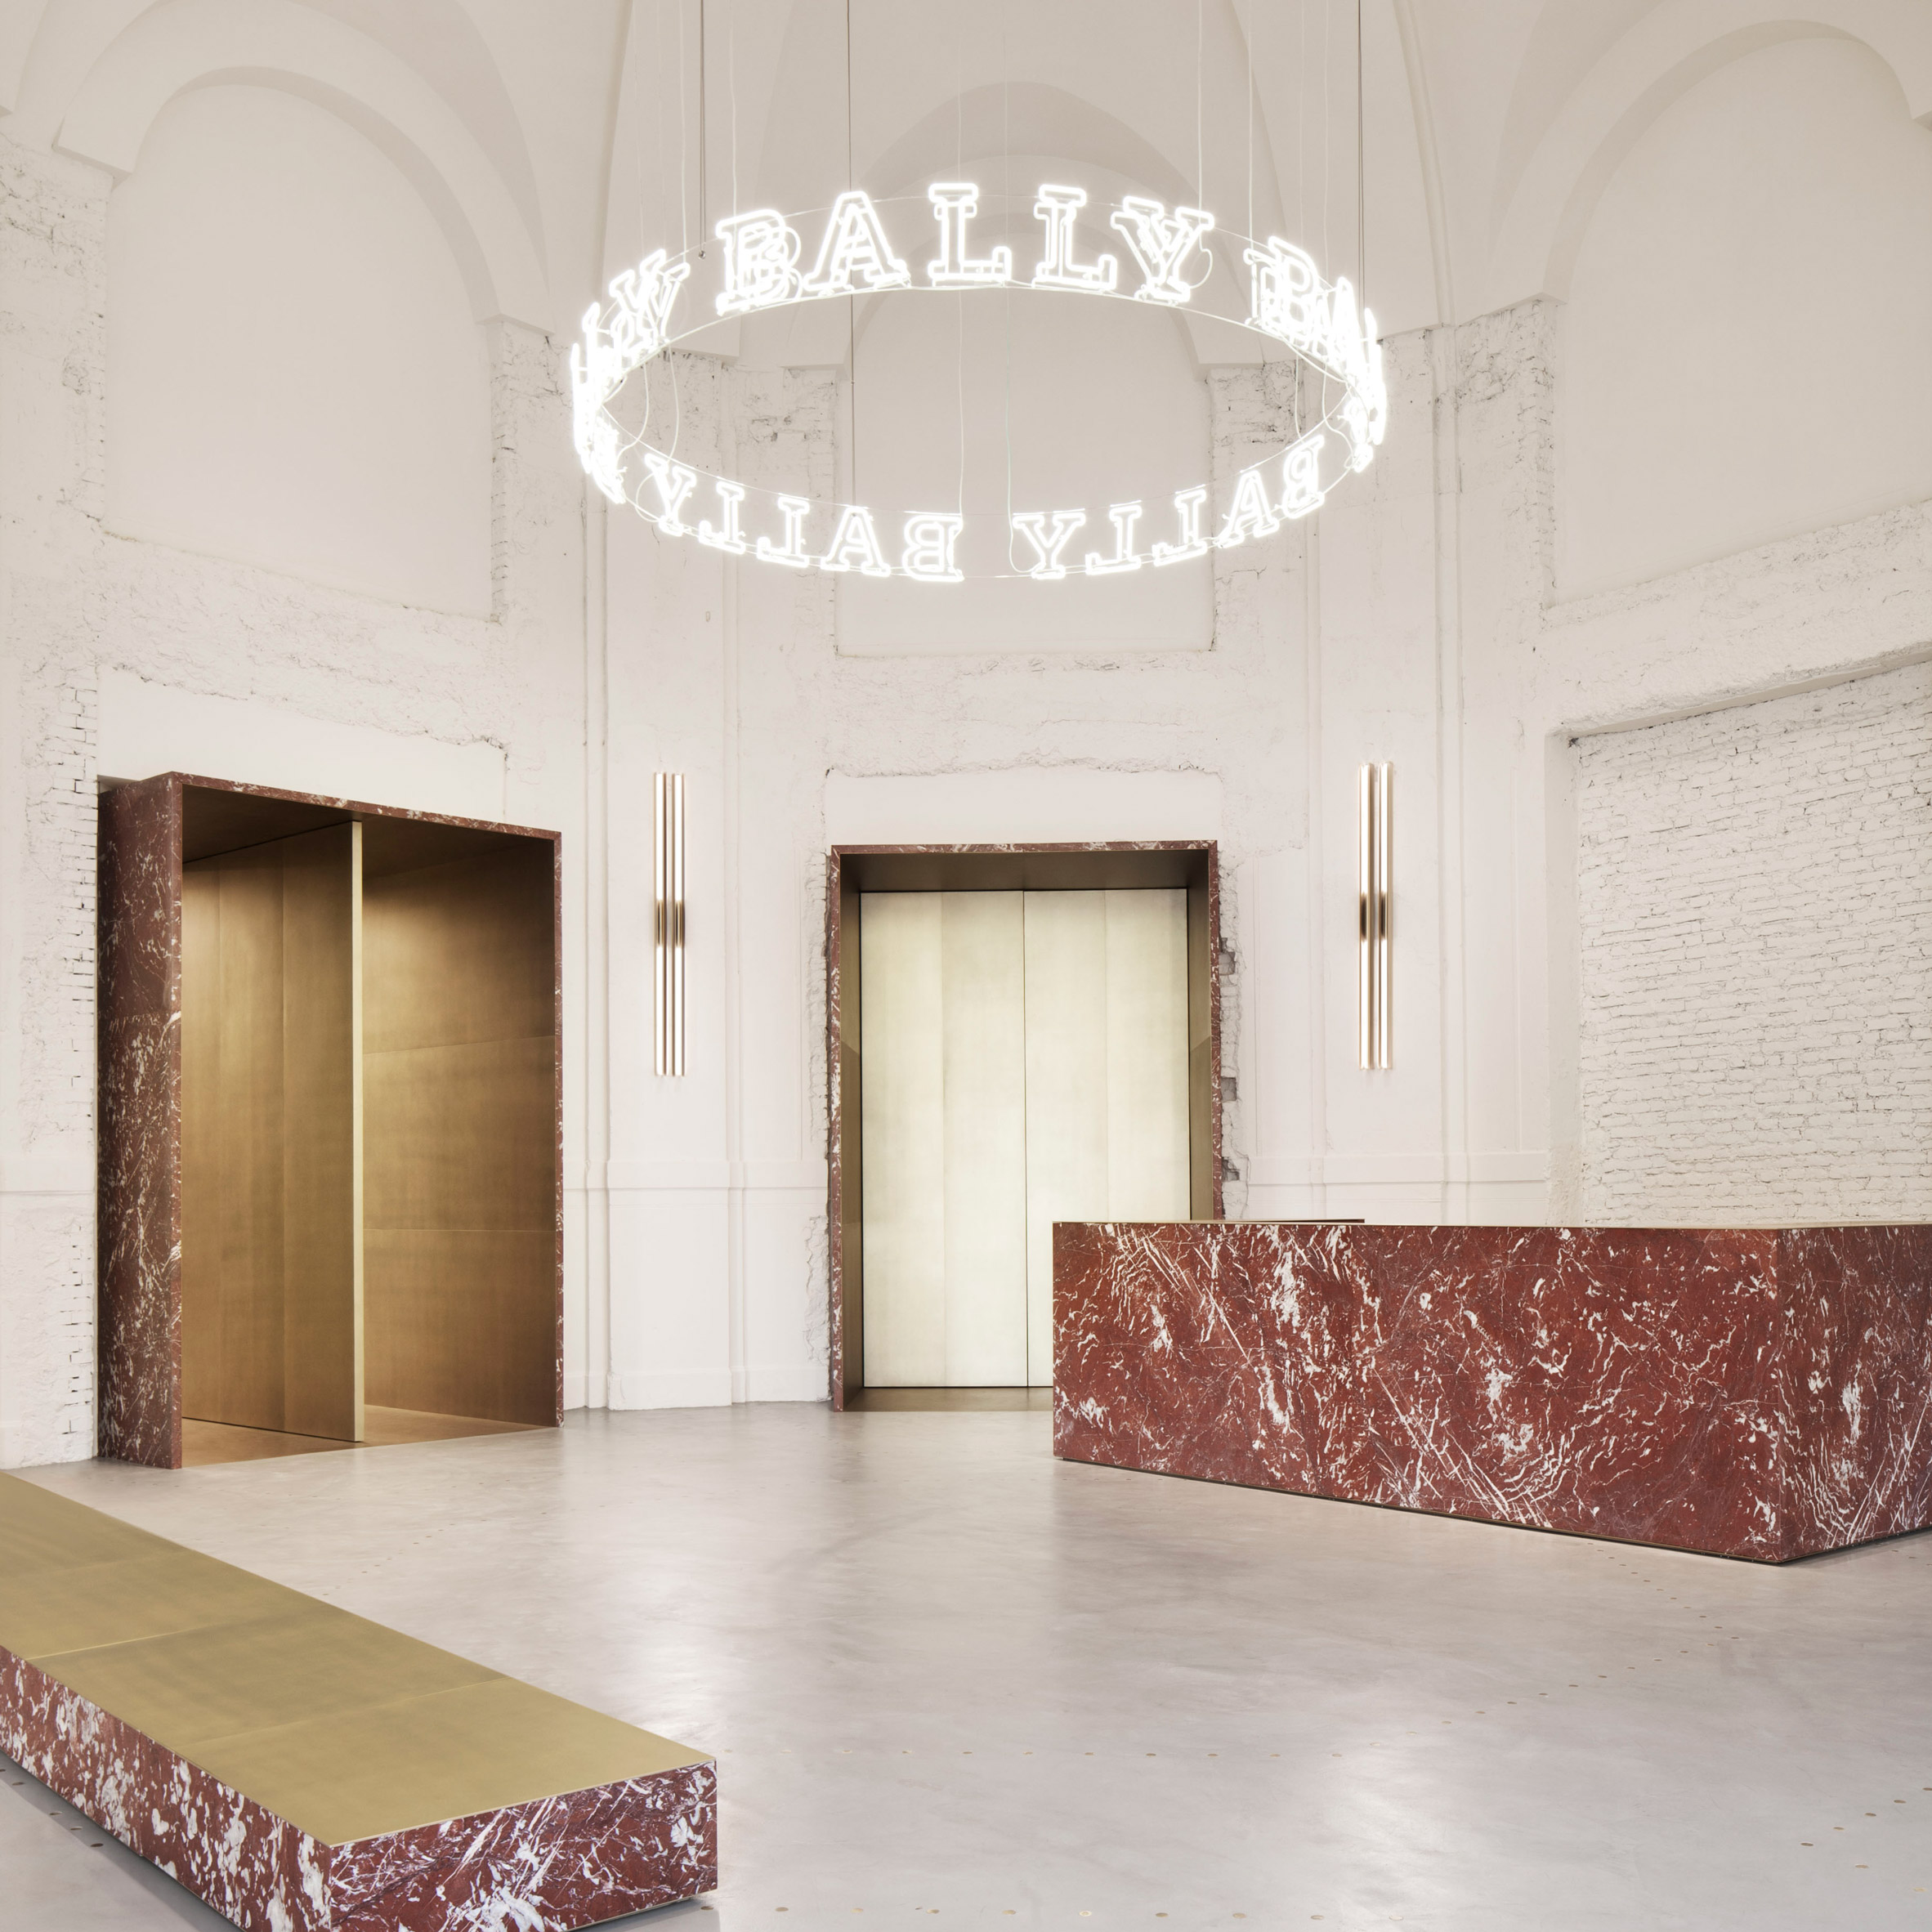 Milan travel guide: Bally showroom by Storagemilano